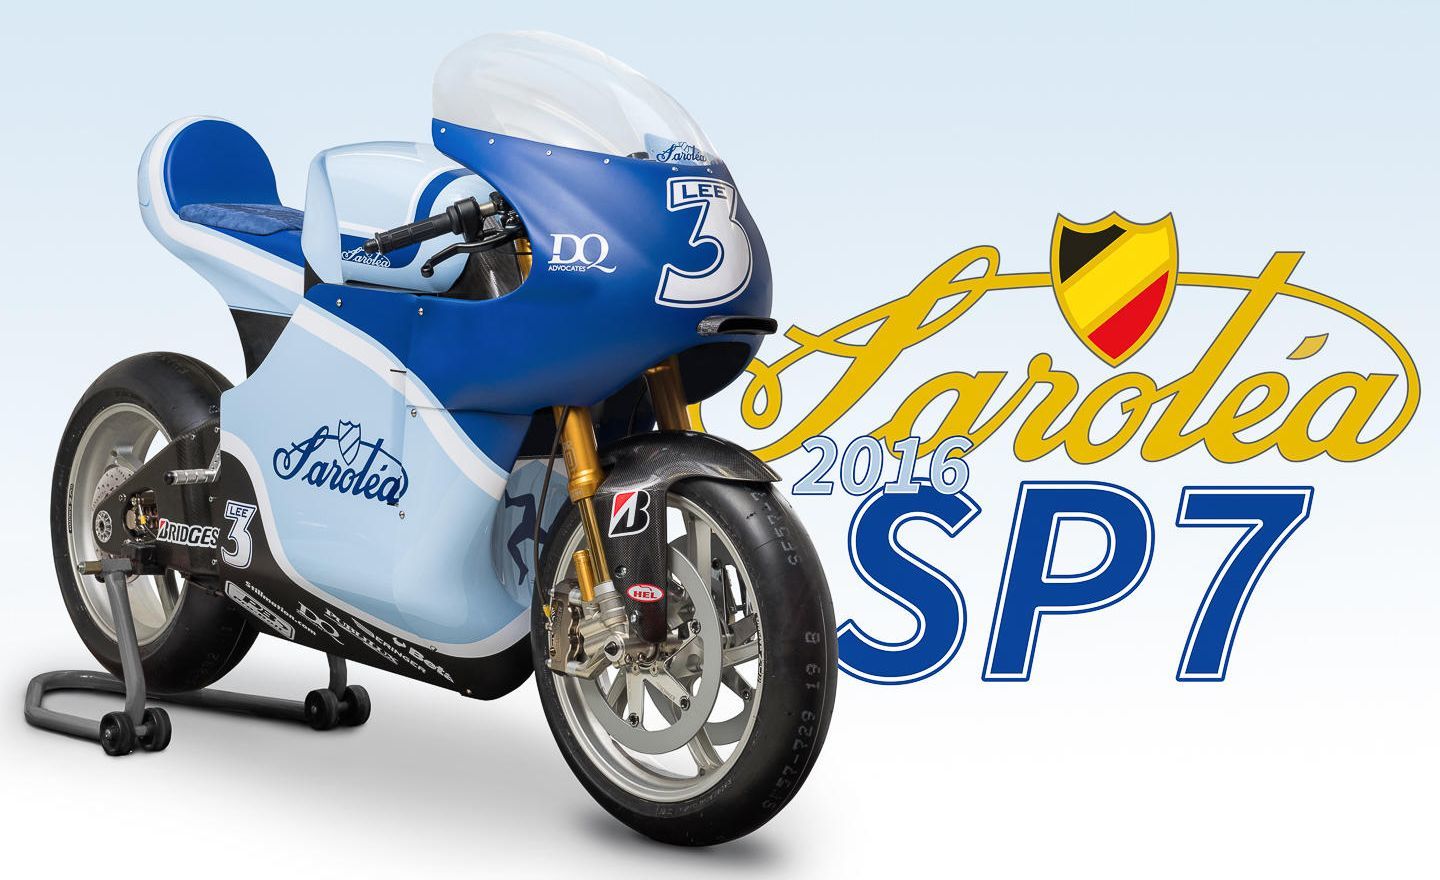 Sarolea Racing が 今期の TT Zero 向け SP7 を発表_f0004270_23492204.jpg